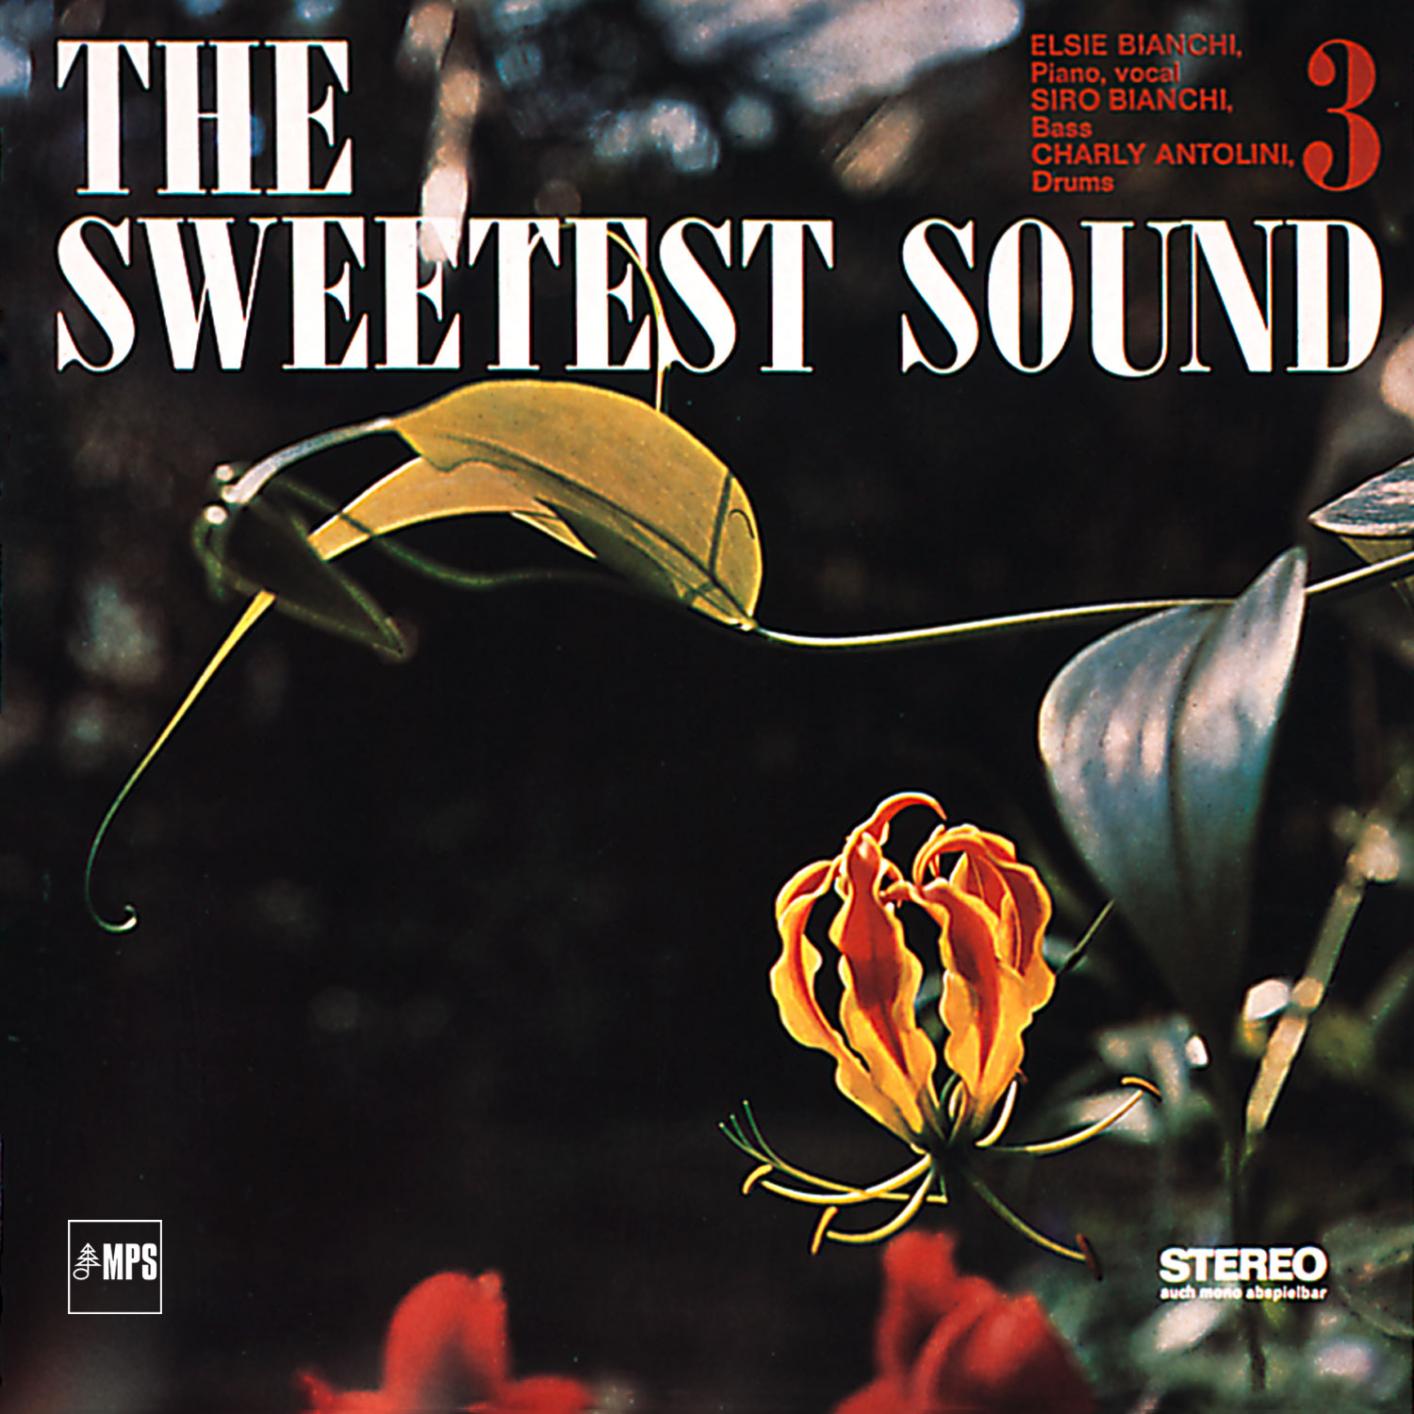 Elsie Bianchi Trio - The Sweetest Sound (1965/2015) [HighResAudio FLAC 24bit/88,2kHz]